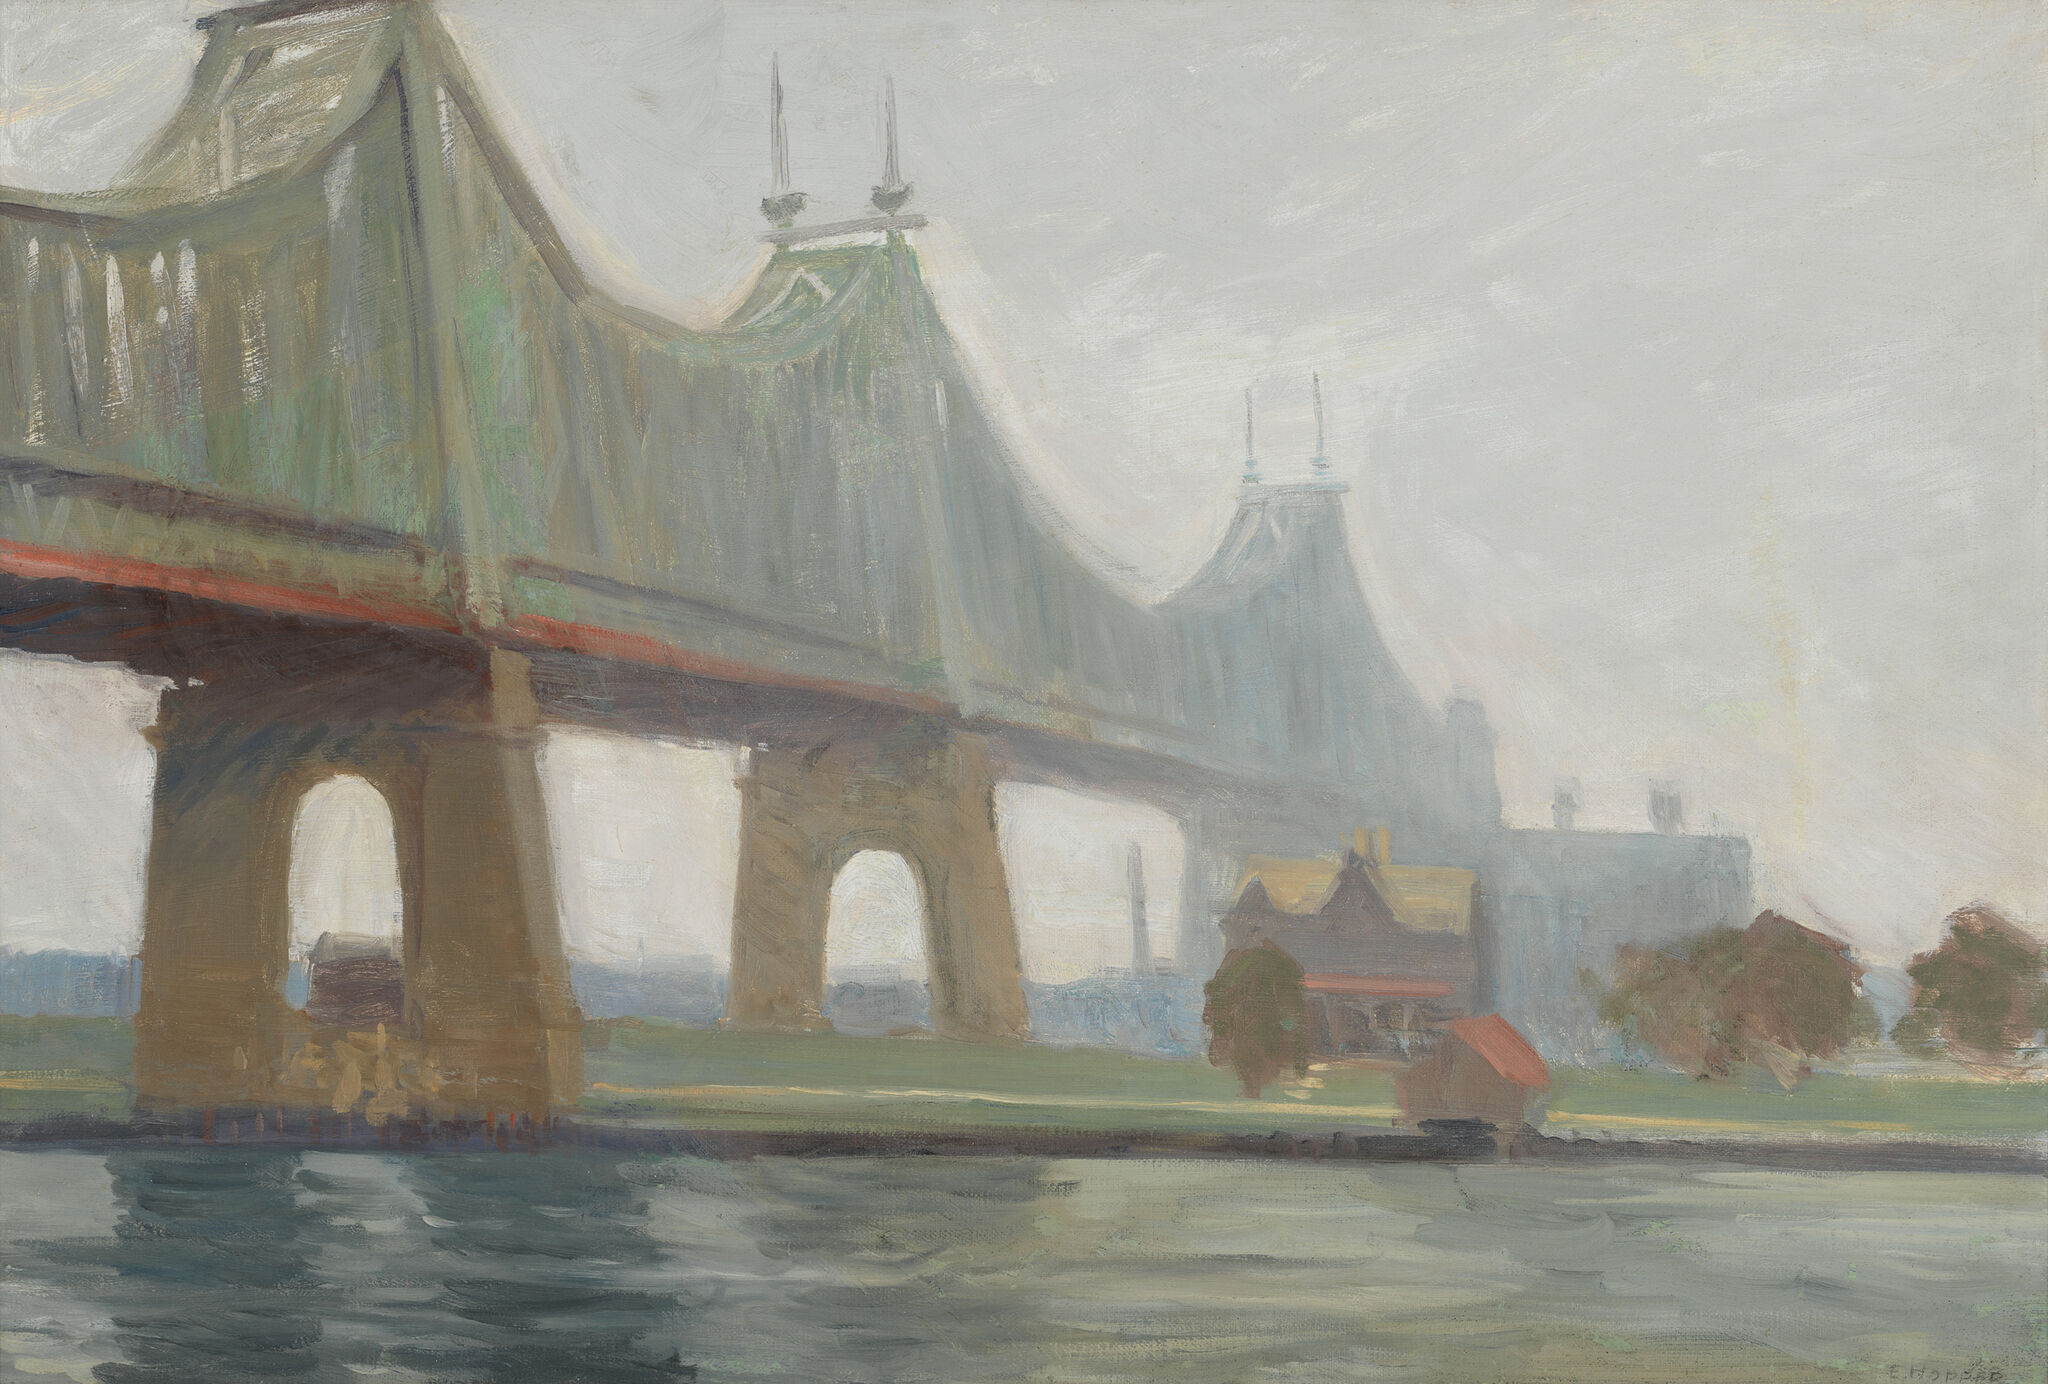 Oil painting of Queensborough Bridge in foggy weather.